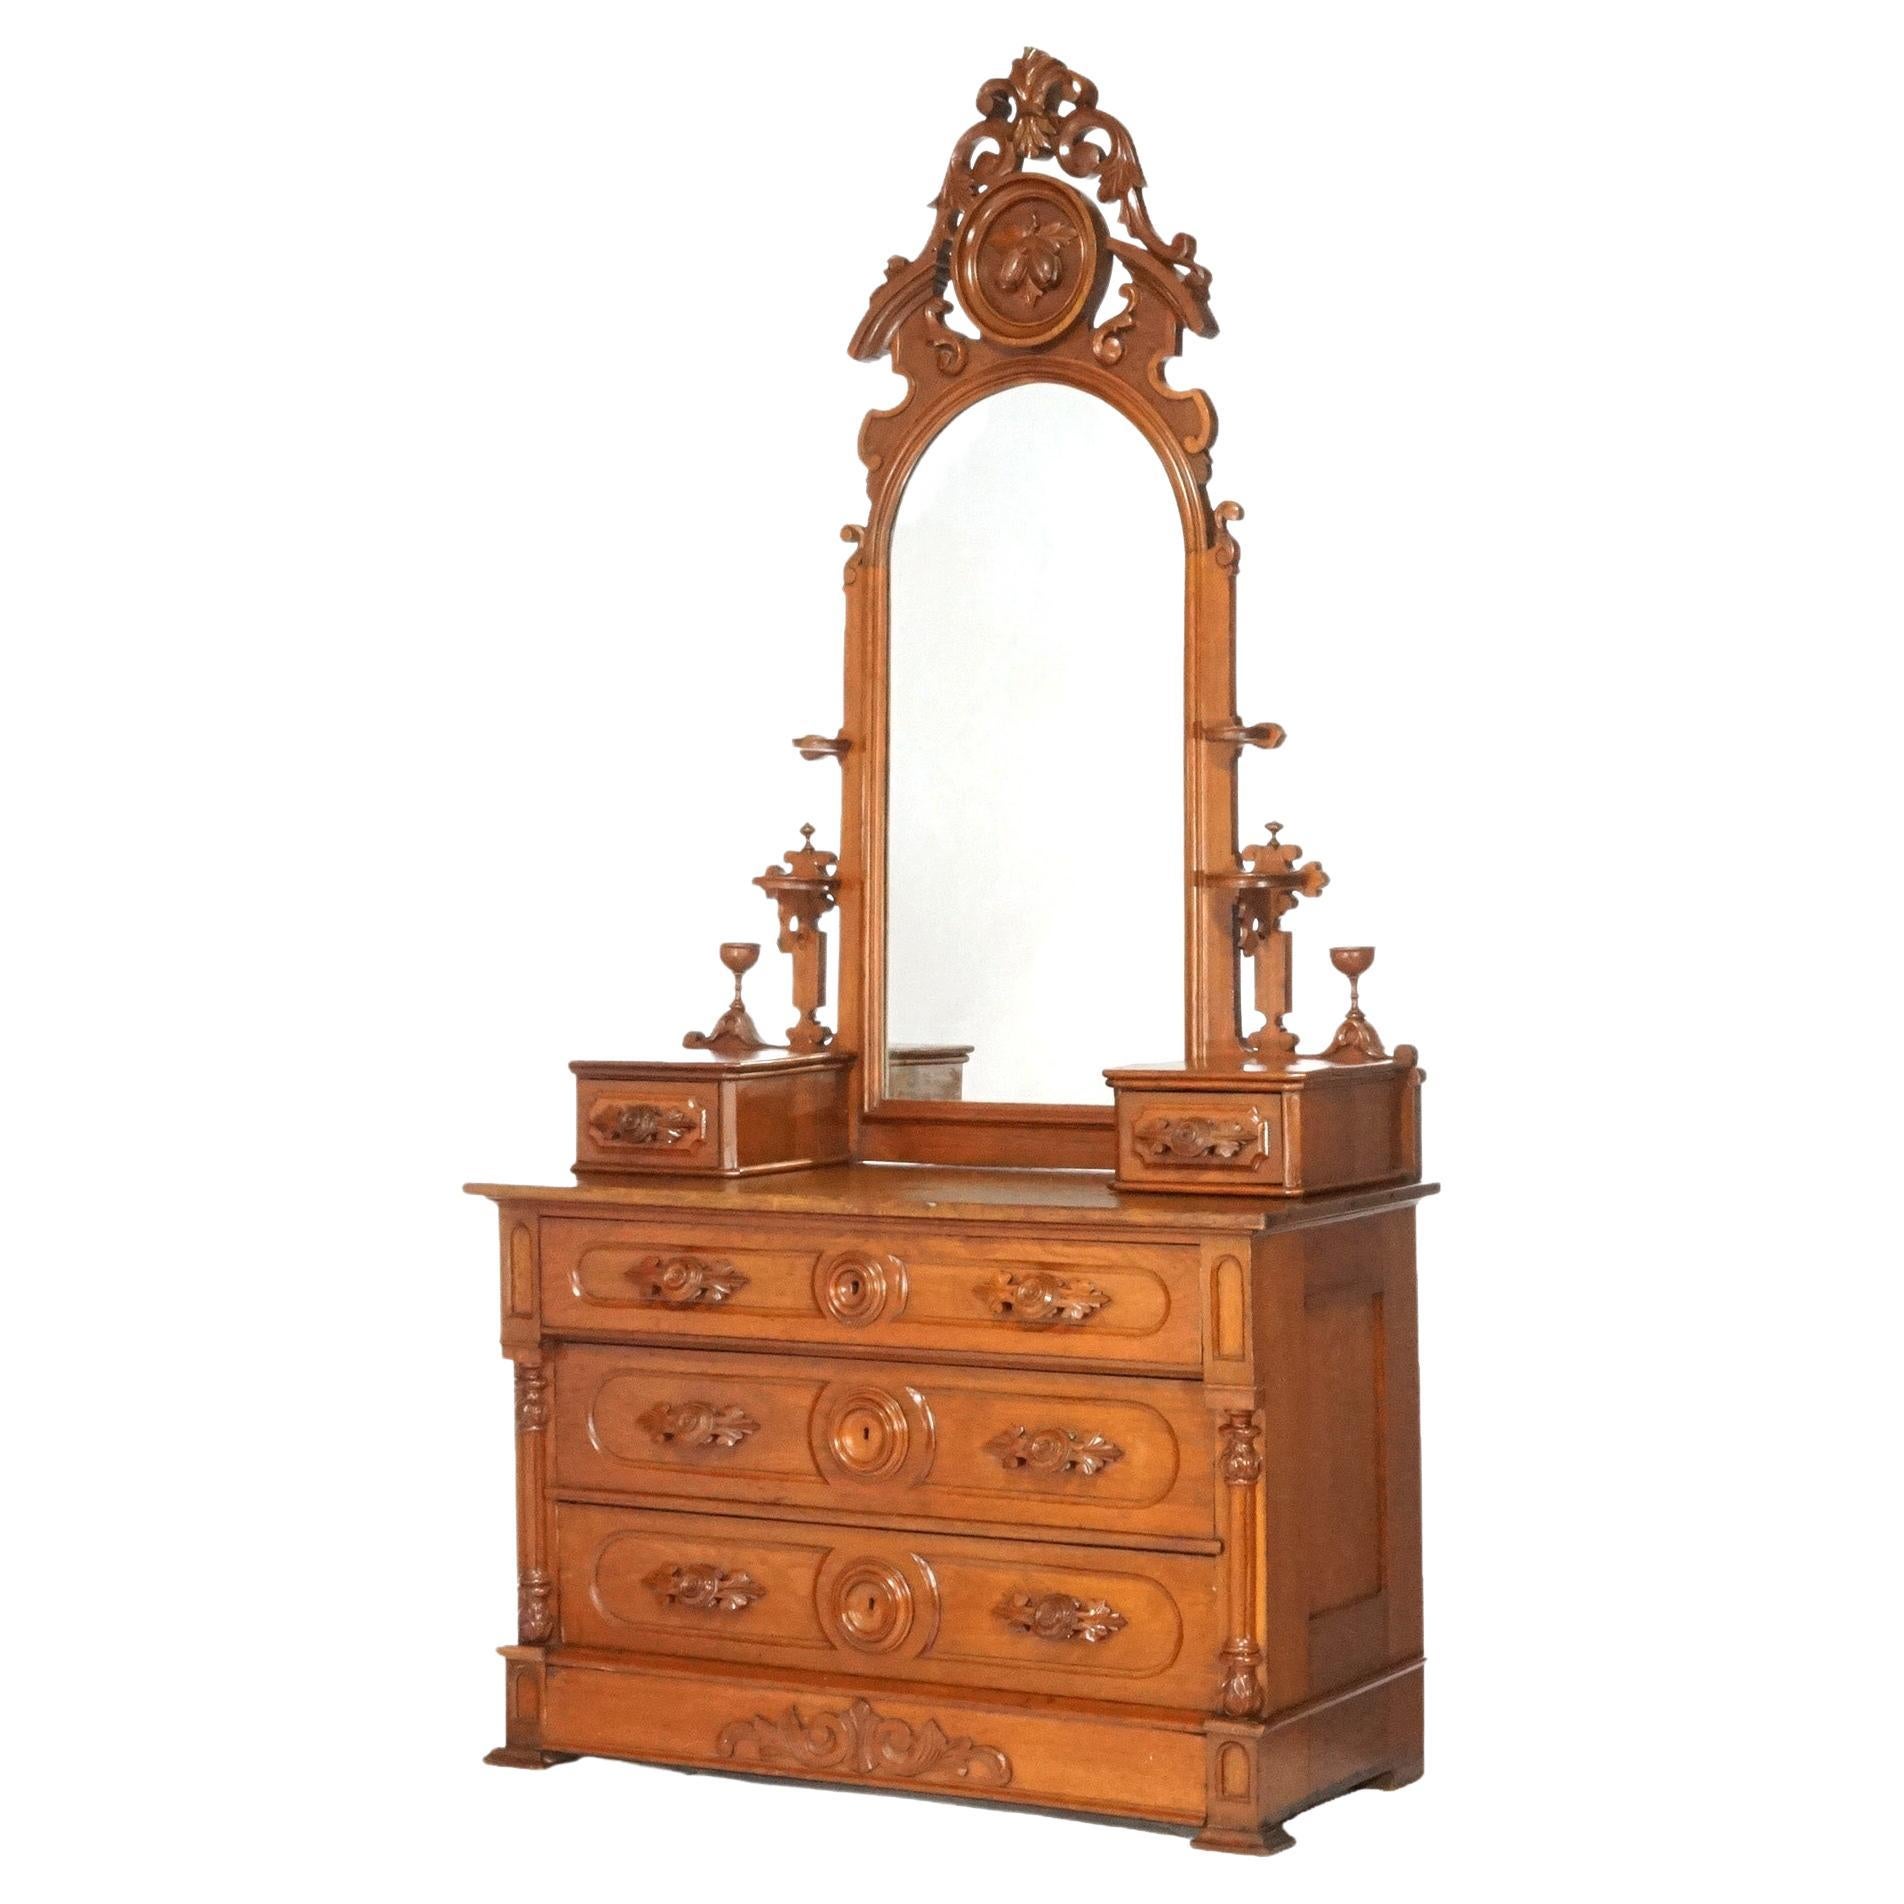 Antique Renaissance Revival Carved Walnut Dresser with Mirror circa 1880 For Sale